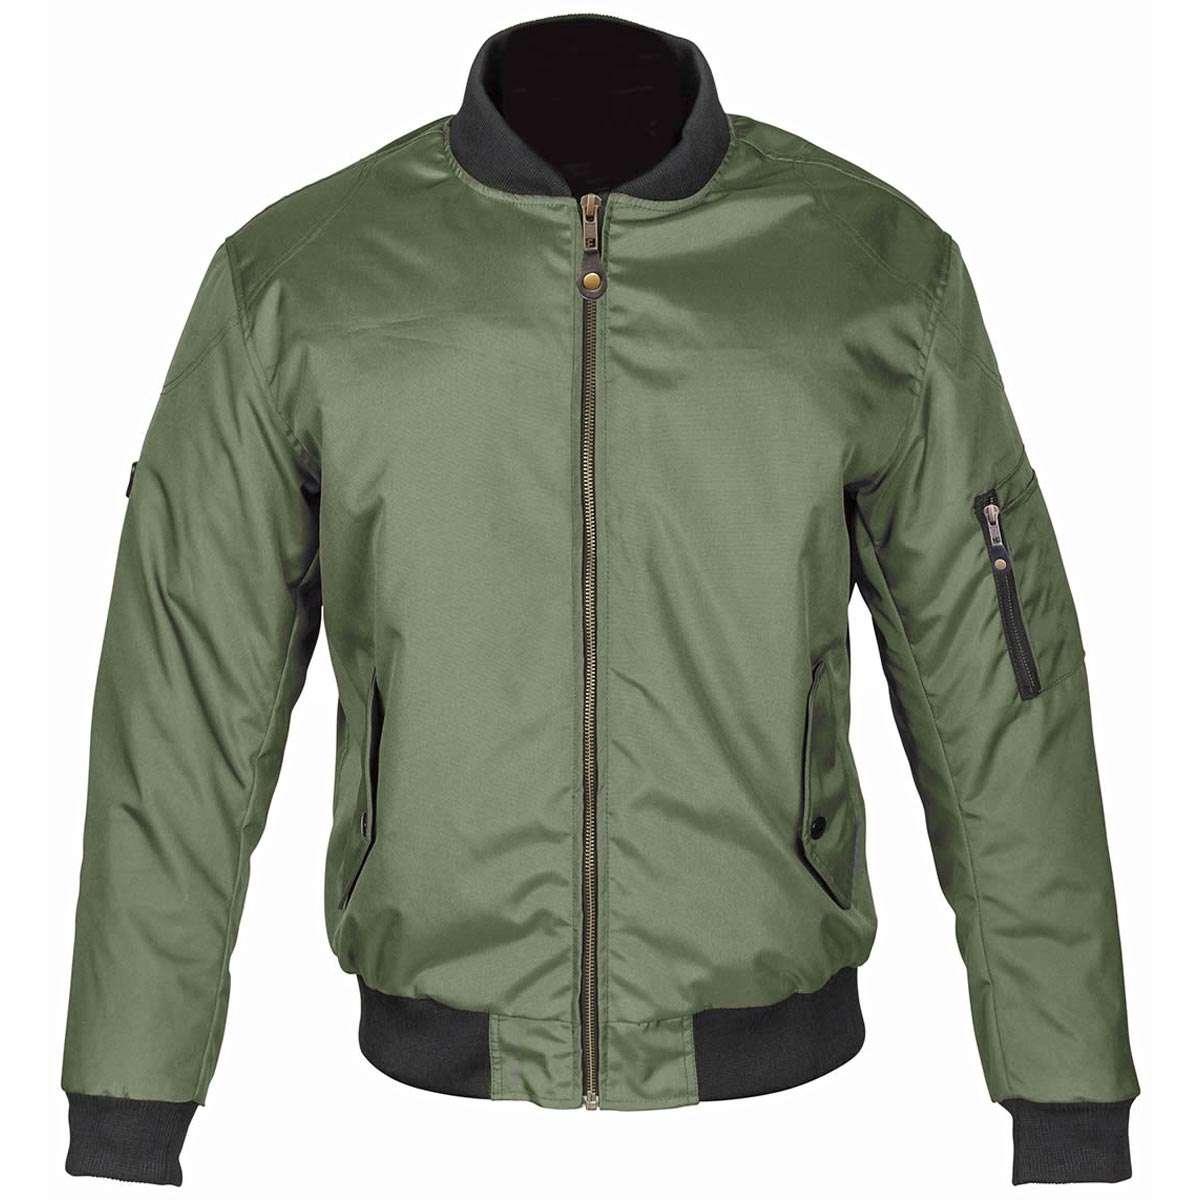 Spada Airforce 1 Bomber Jacket CE WP - Olive - Browse our range of Clothing: Jackets